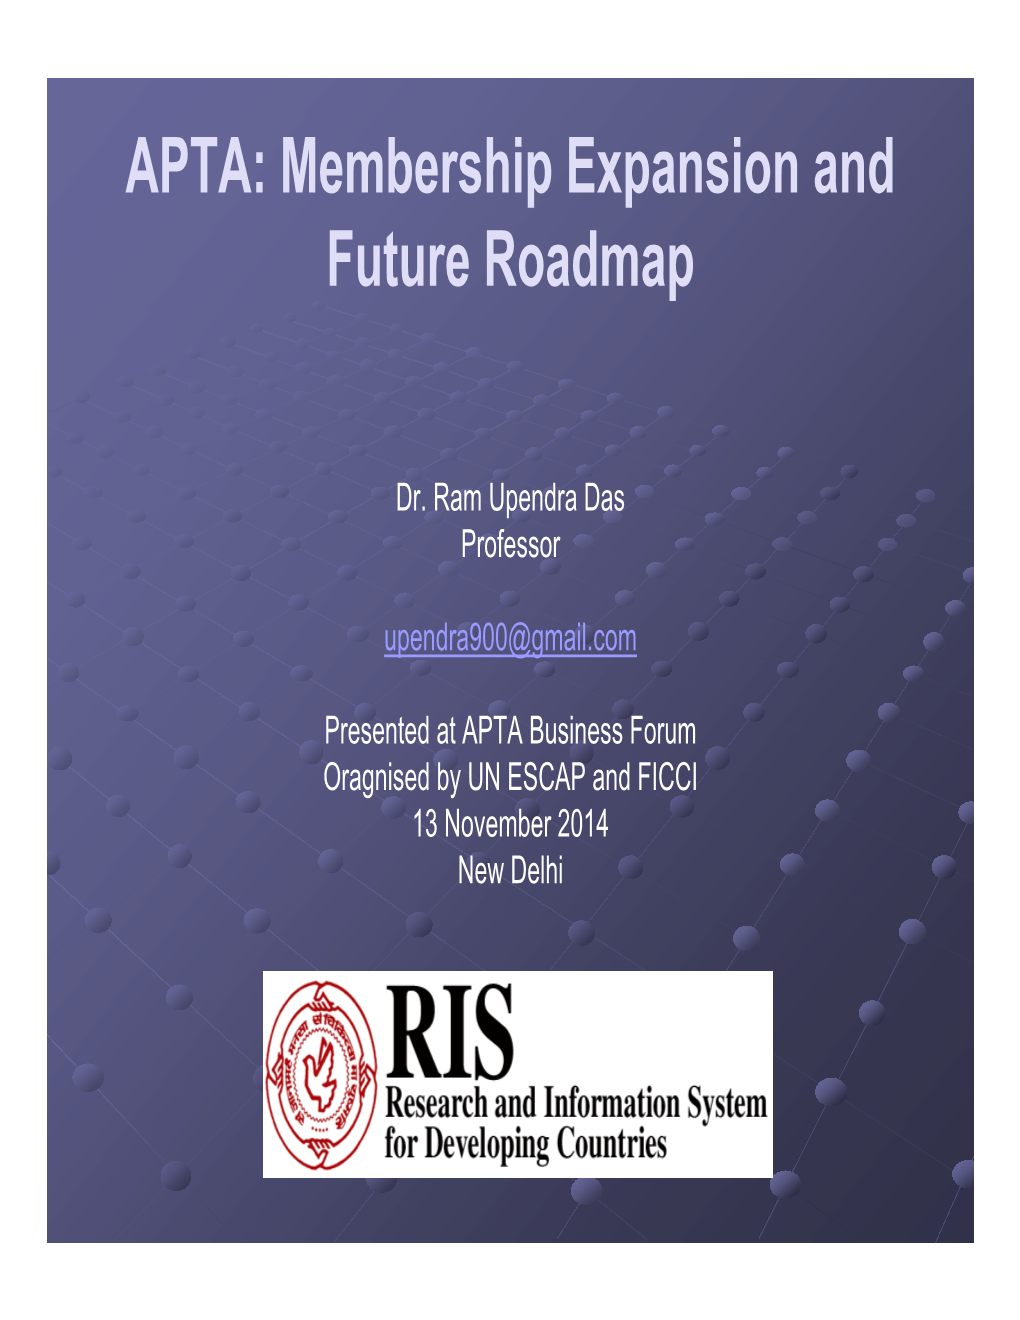 APTA: Membership Expansion and Future Roadmap